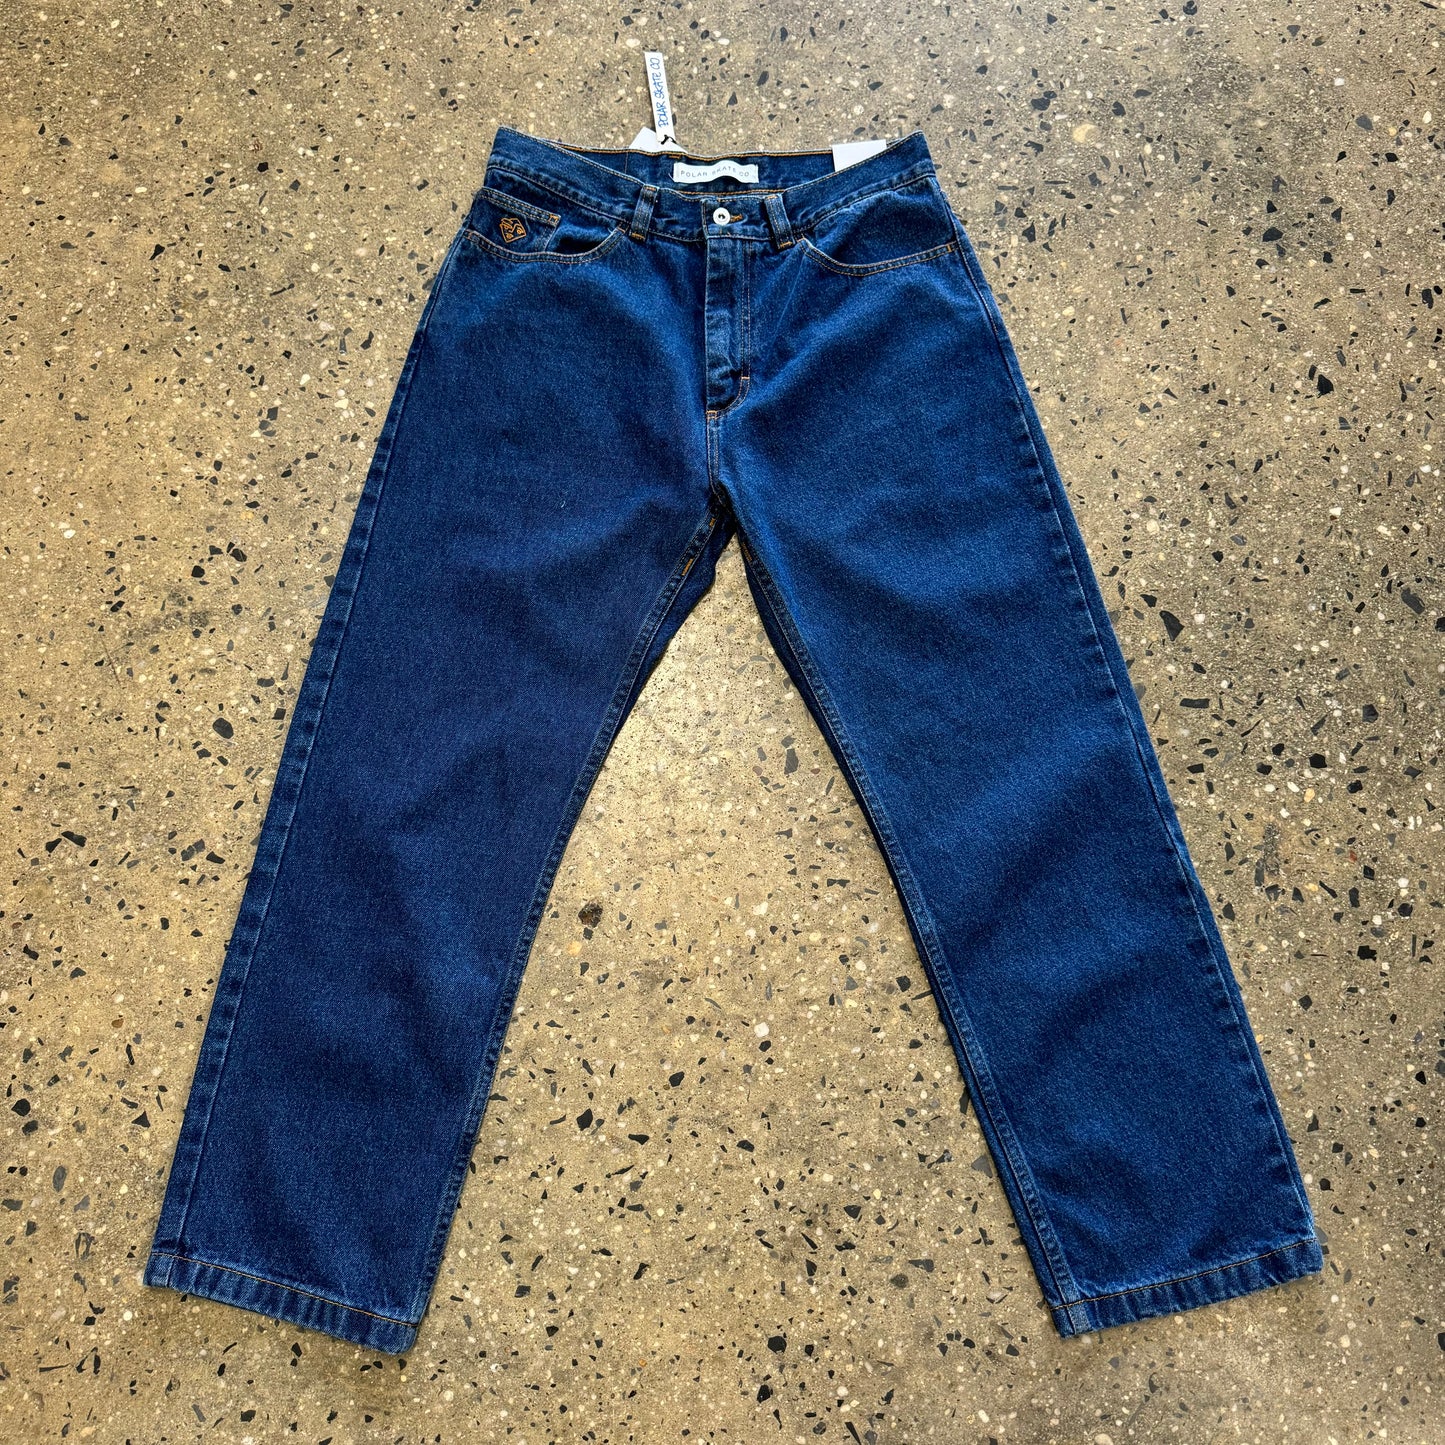 dark blue denim jeans